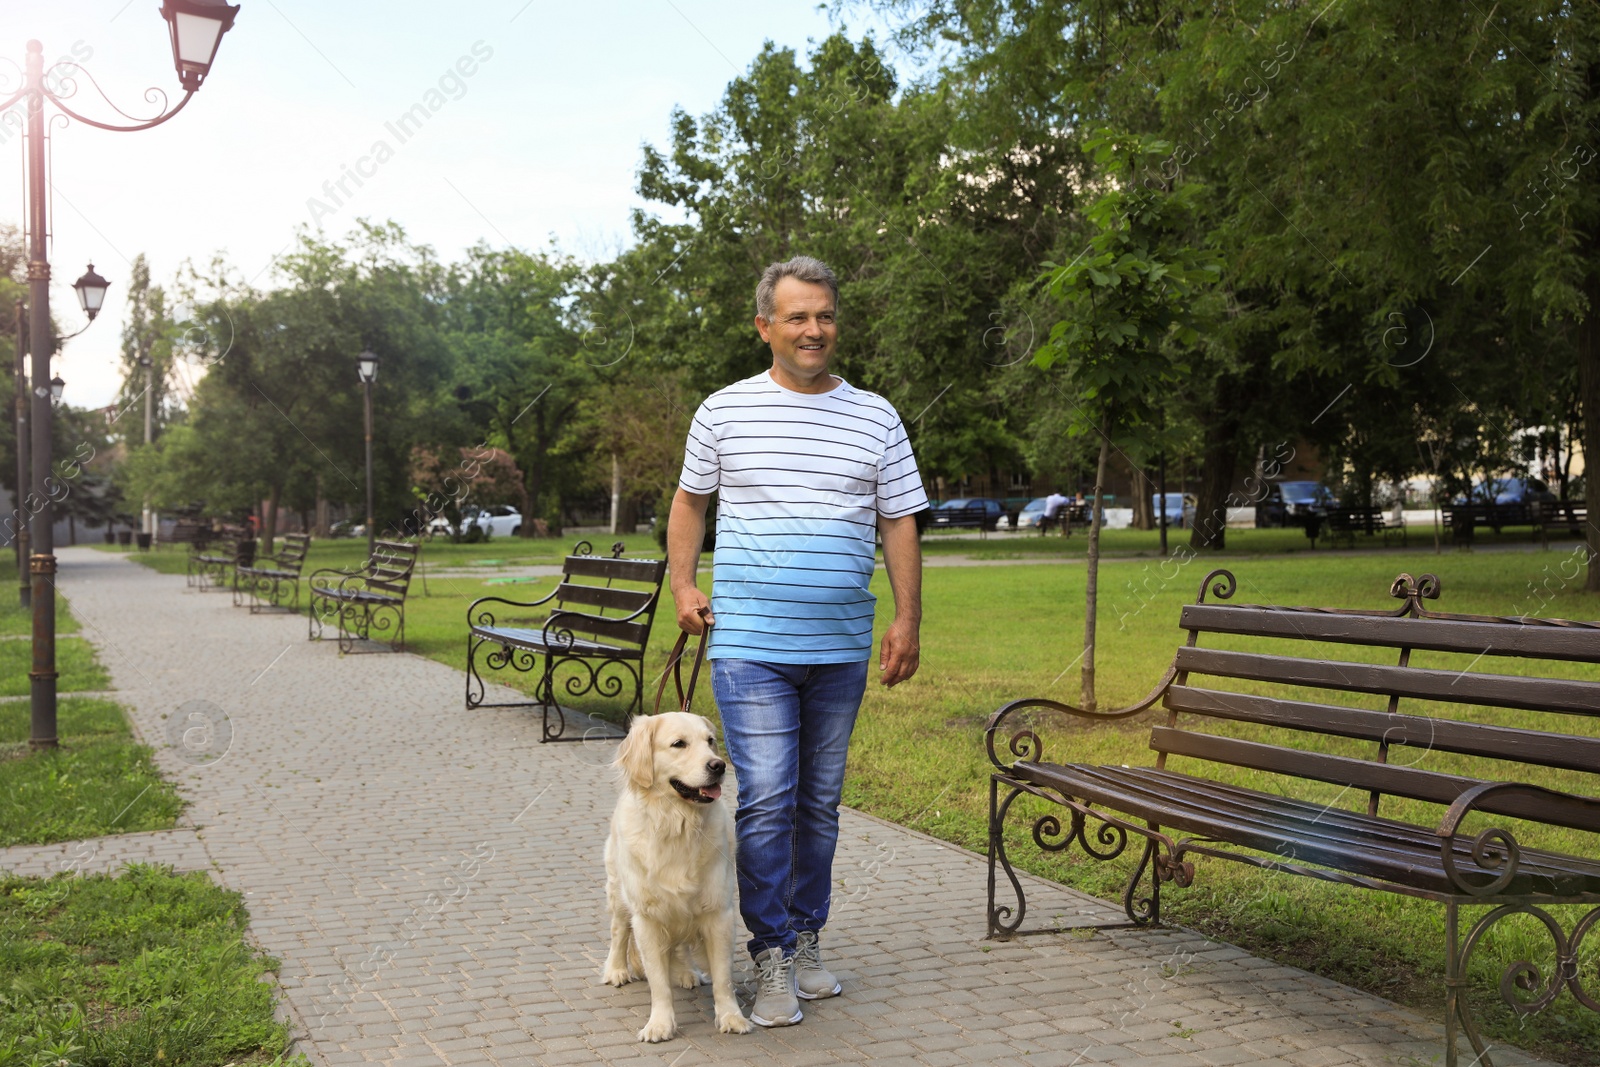 Photo of Happy senior man walking his Golden Retriever dog in park